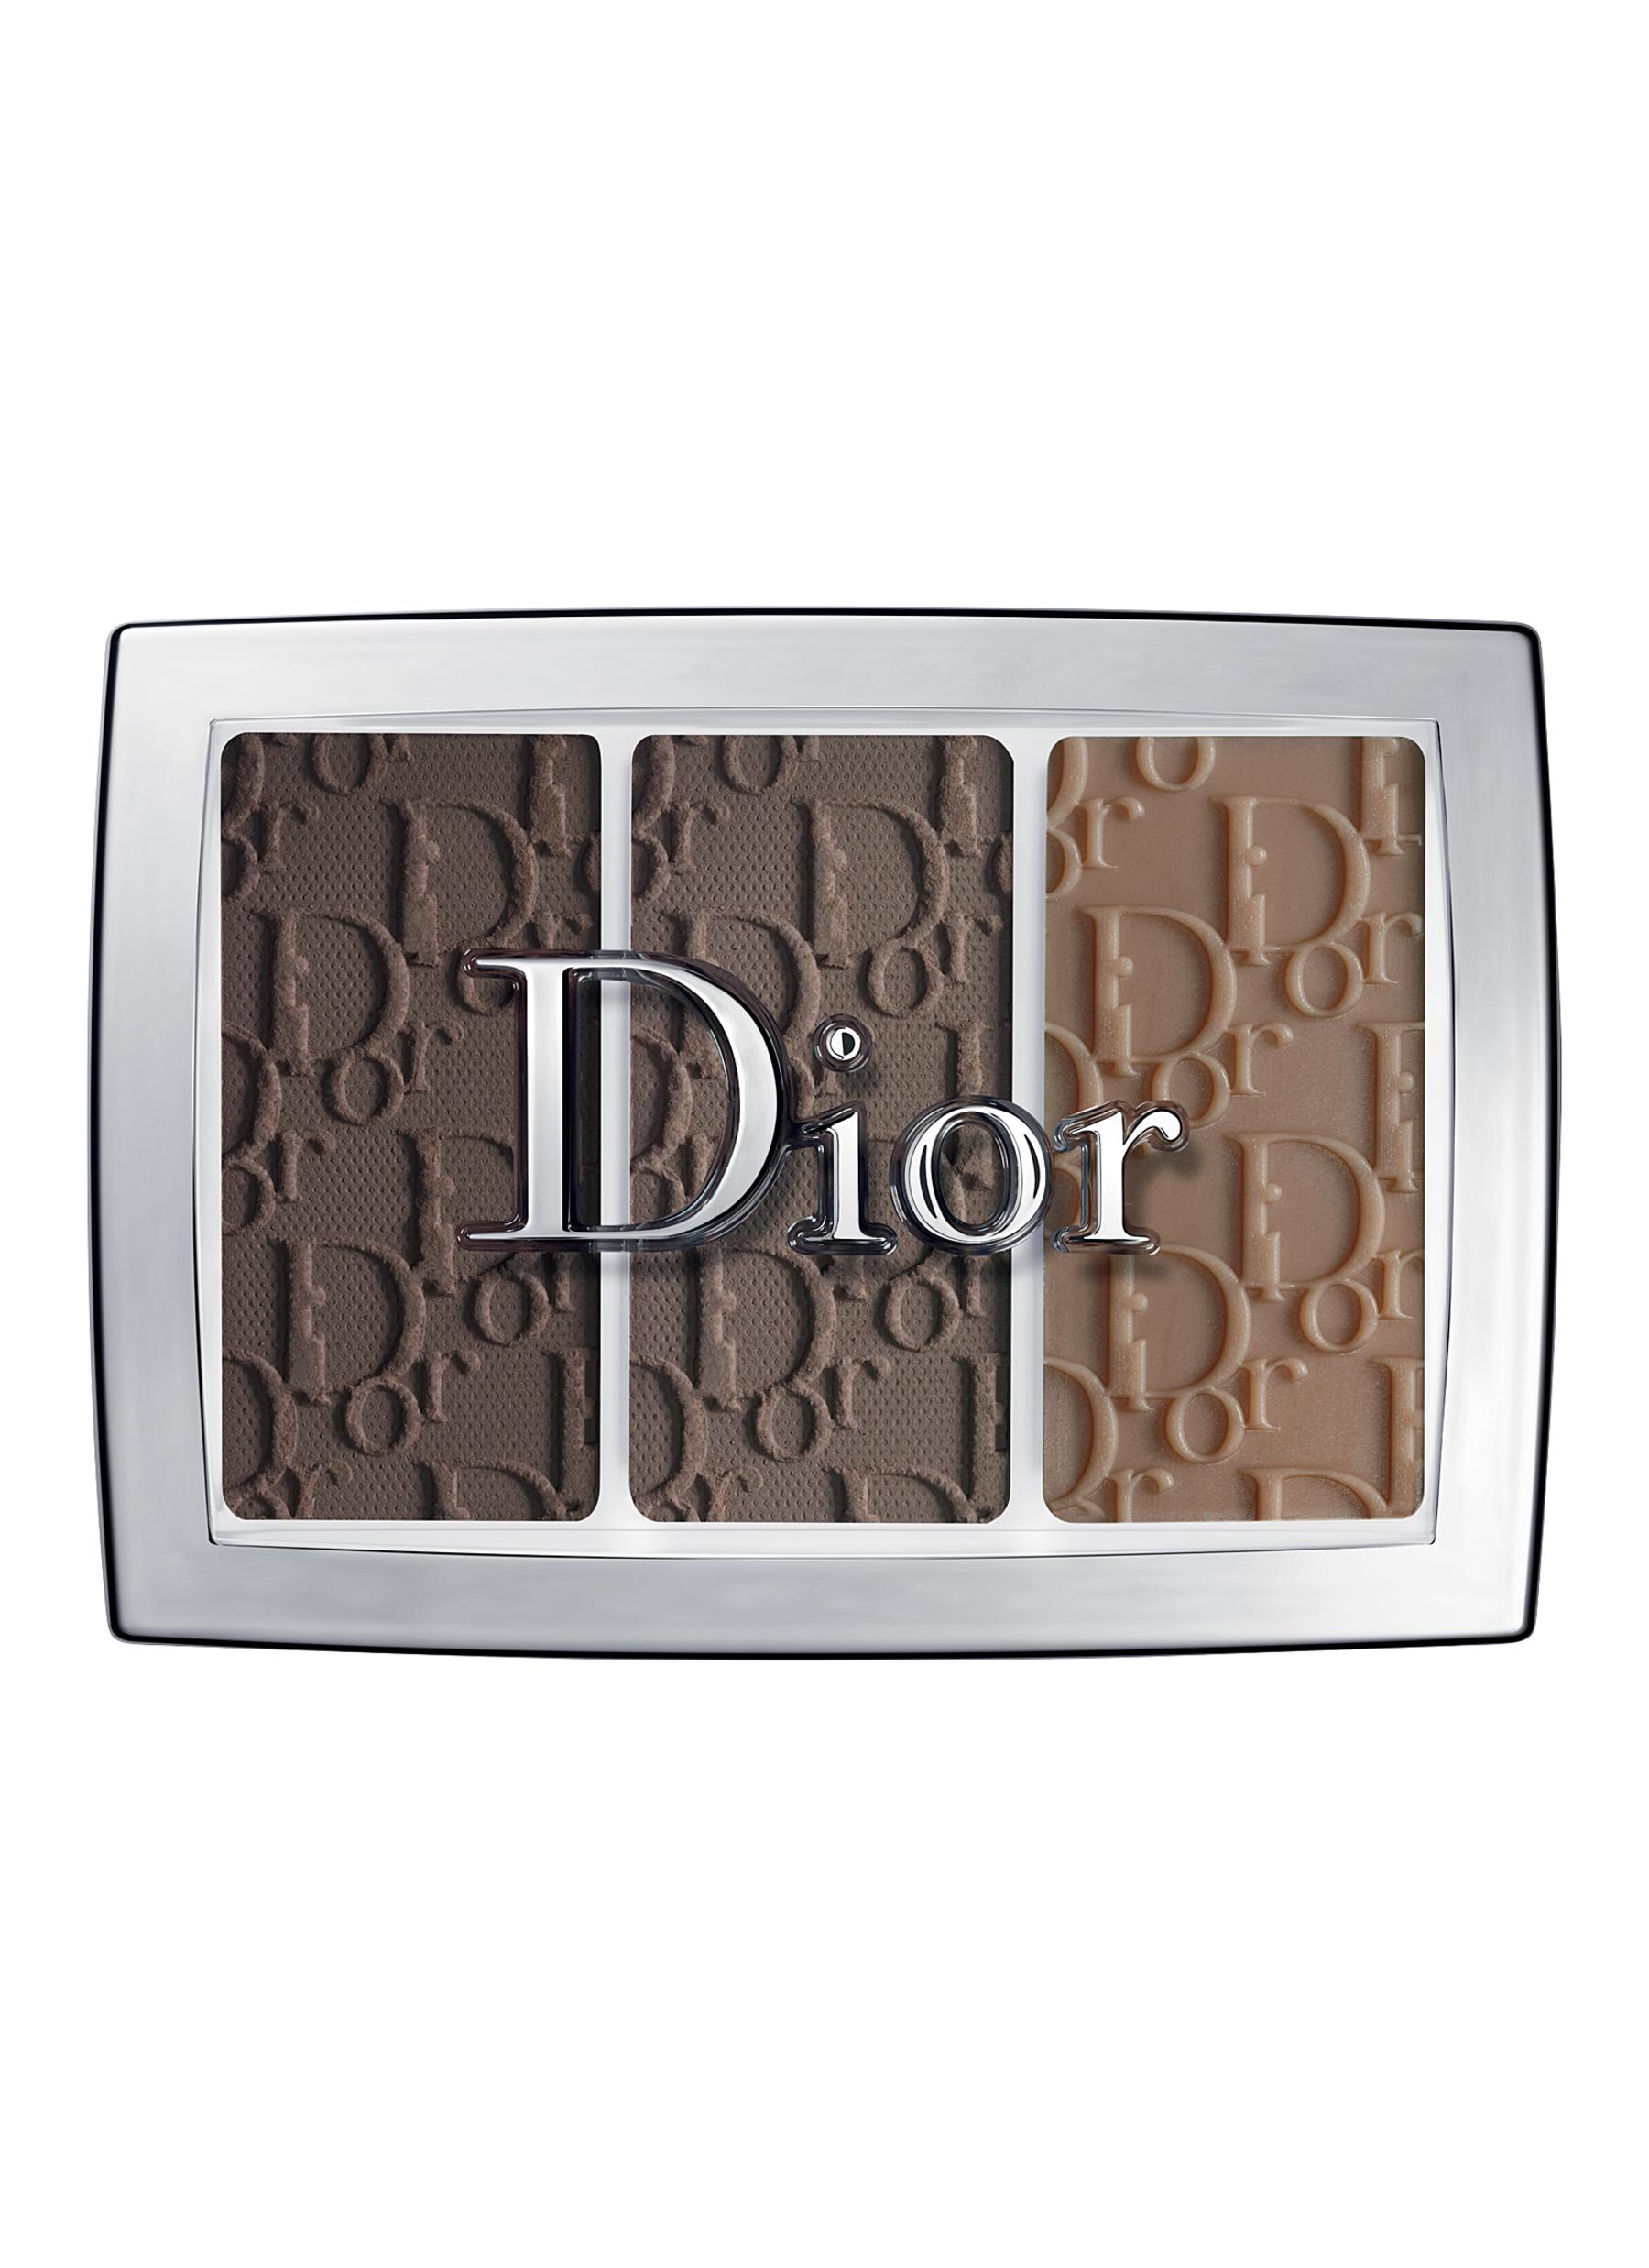 Dior Backstage Brow Palette 002 